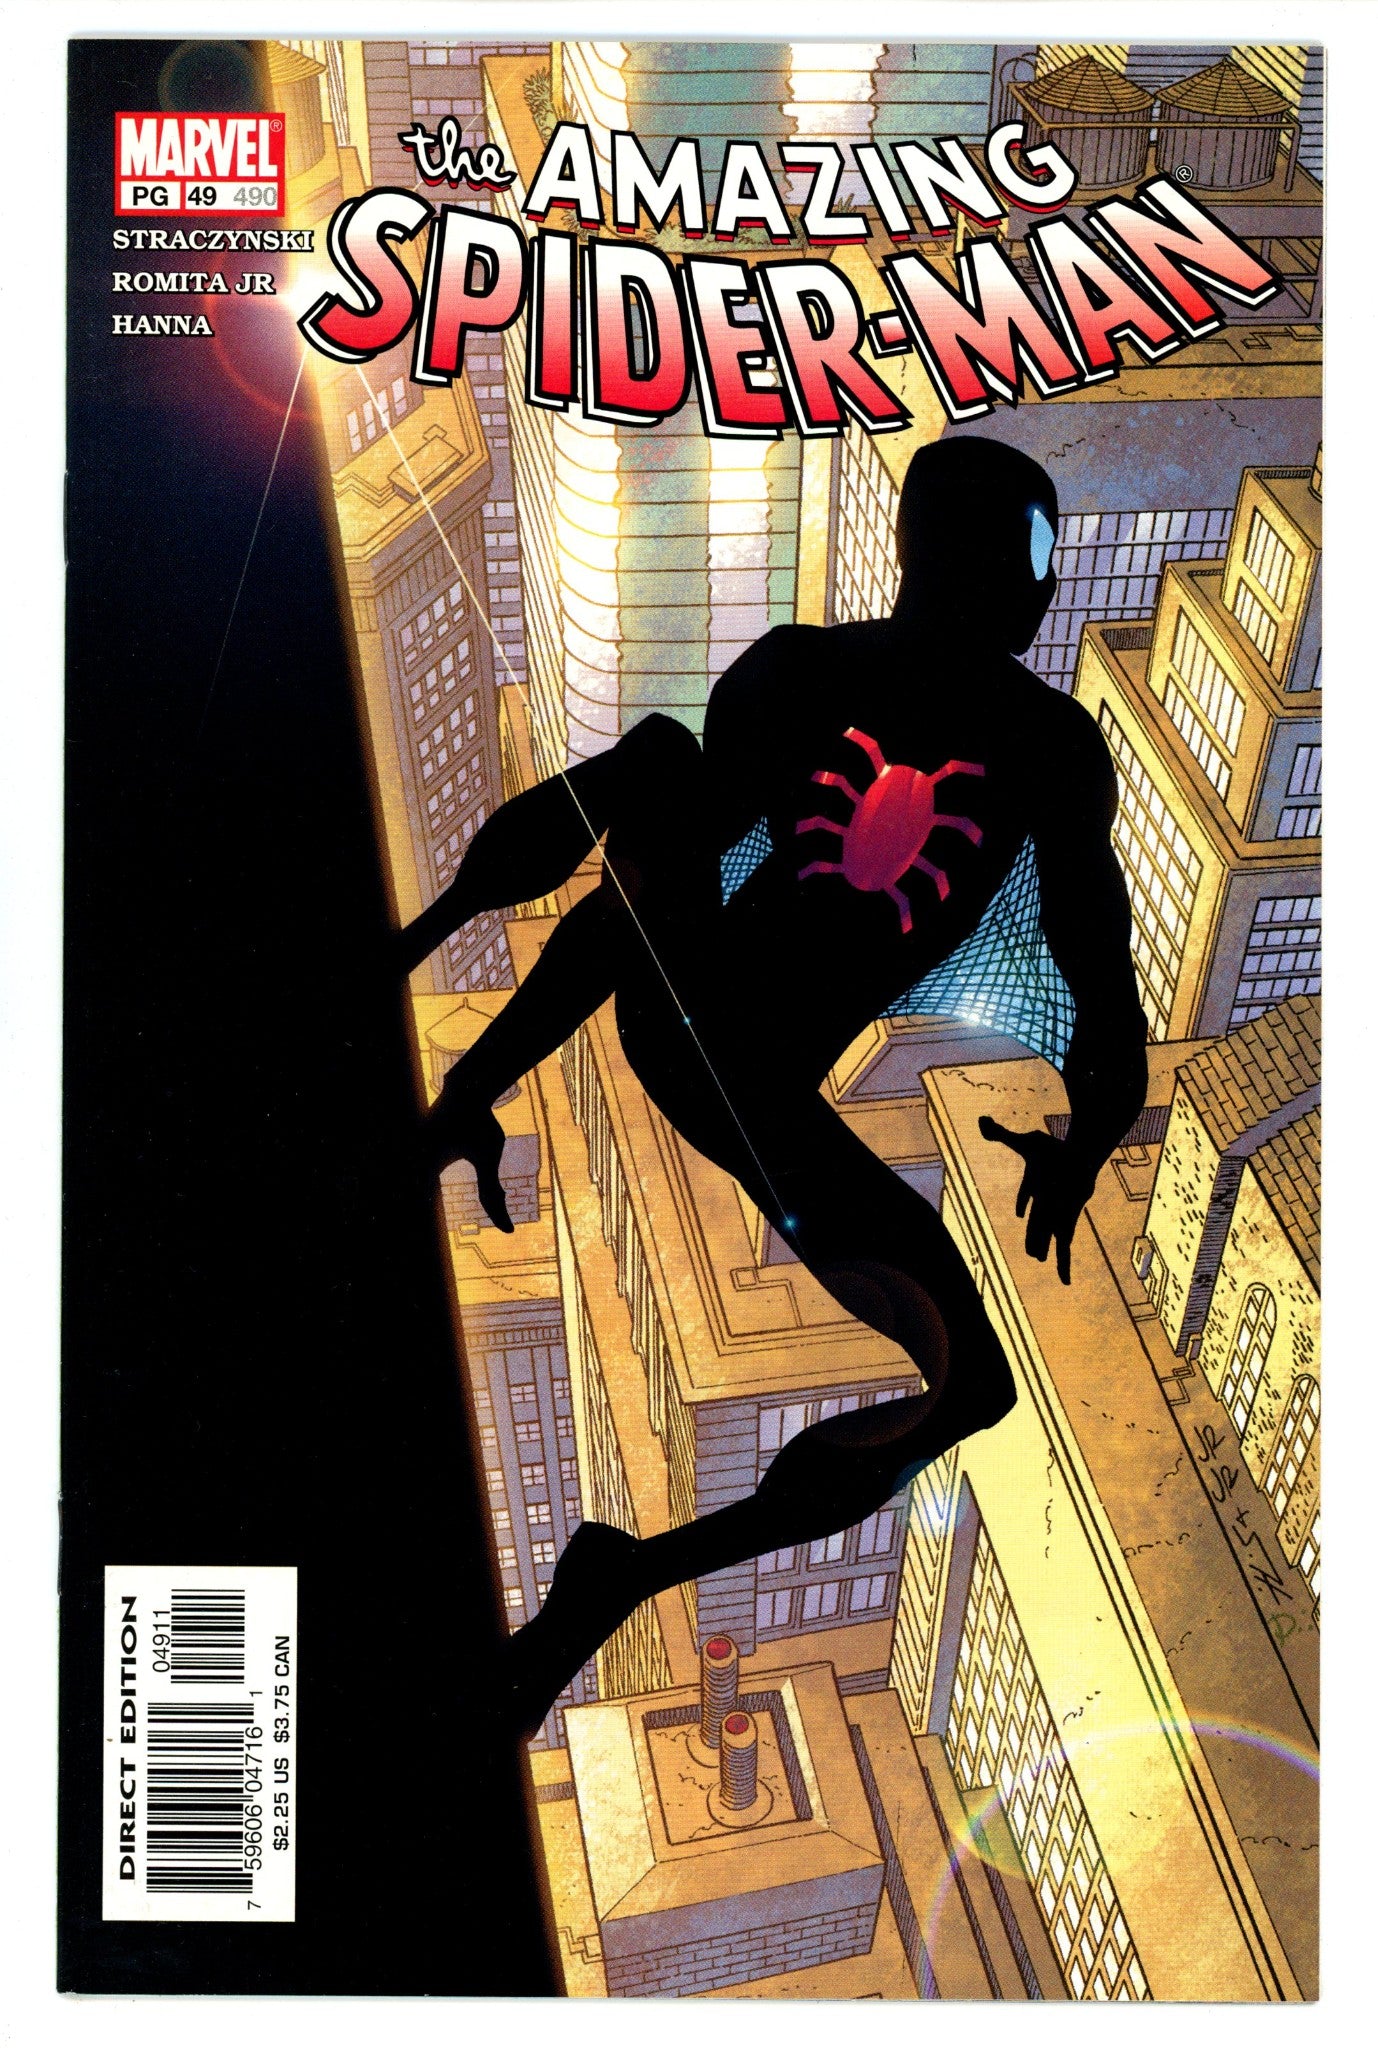 The Amazing Spider-Man Vol 2 49 (490) High Grade (2003) 